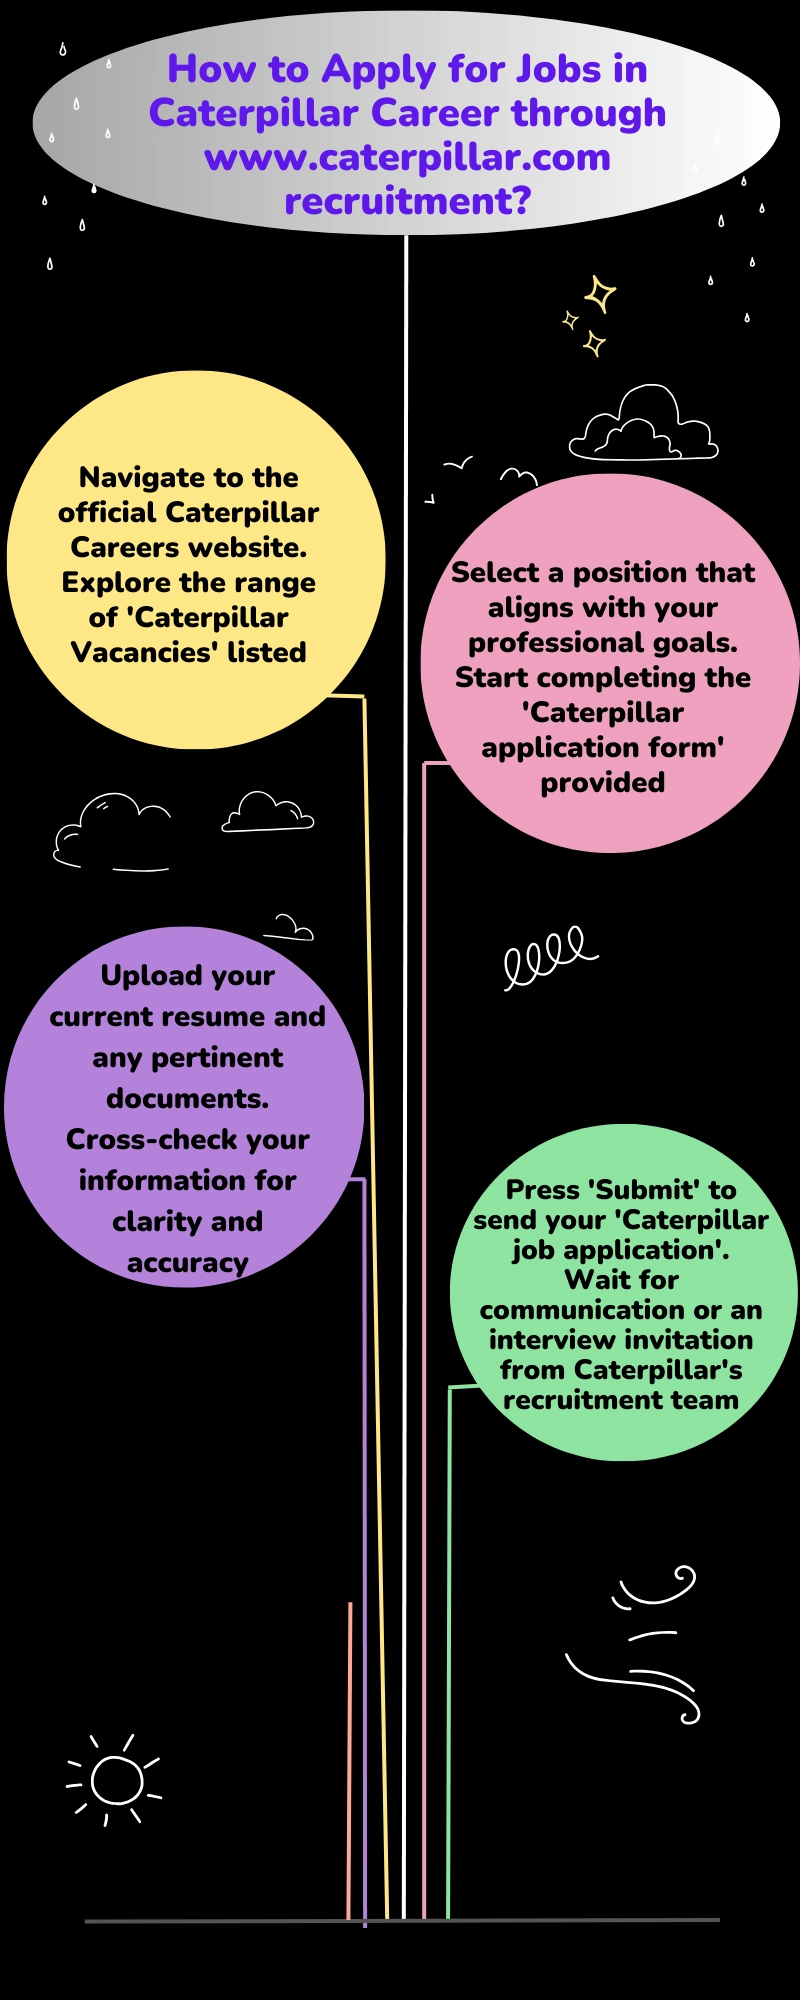 How to Apply for Jobs in Caterpillar Career through www.caterpillar.com recruitment?